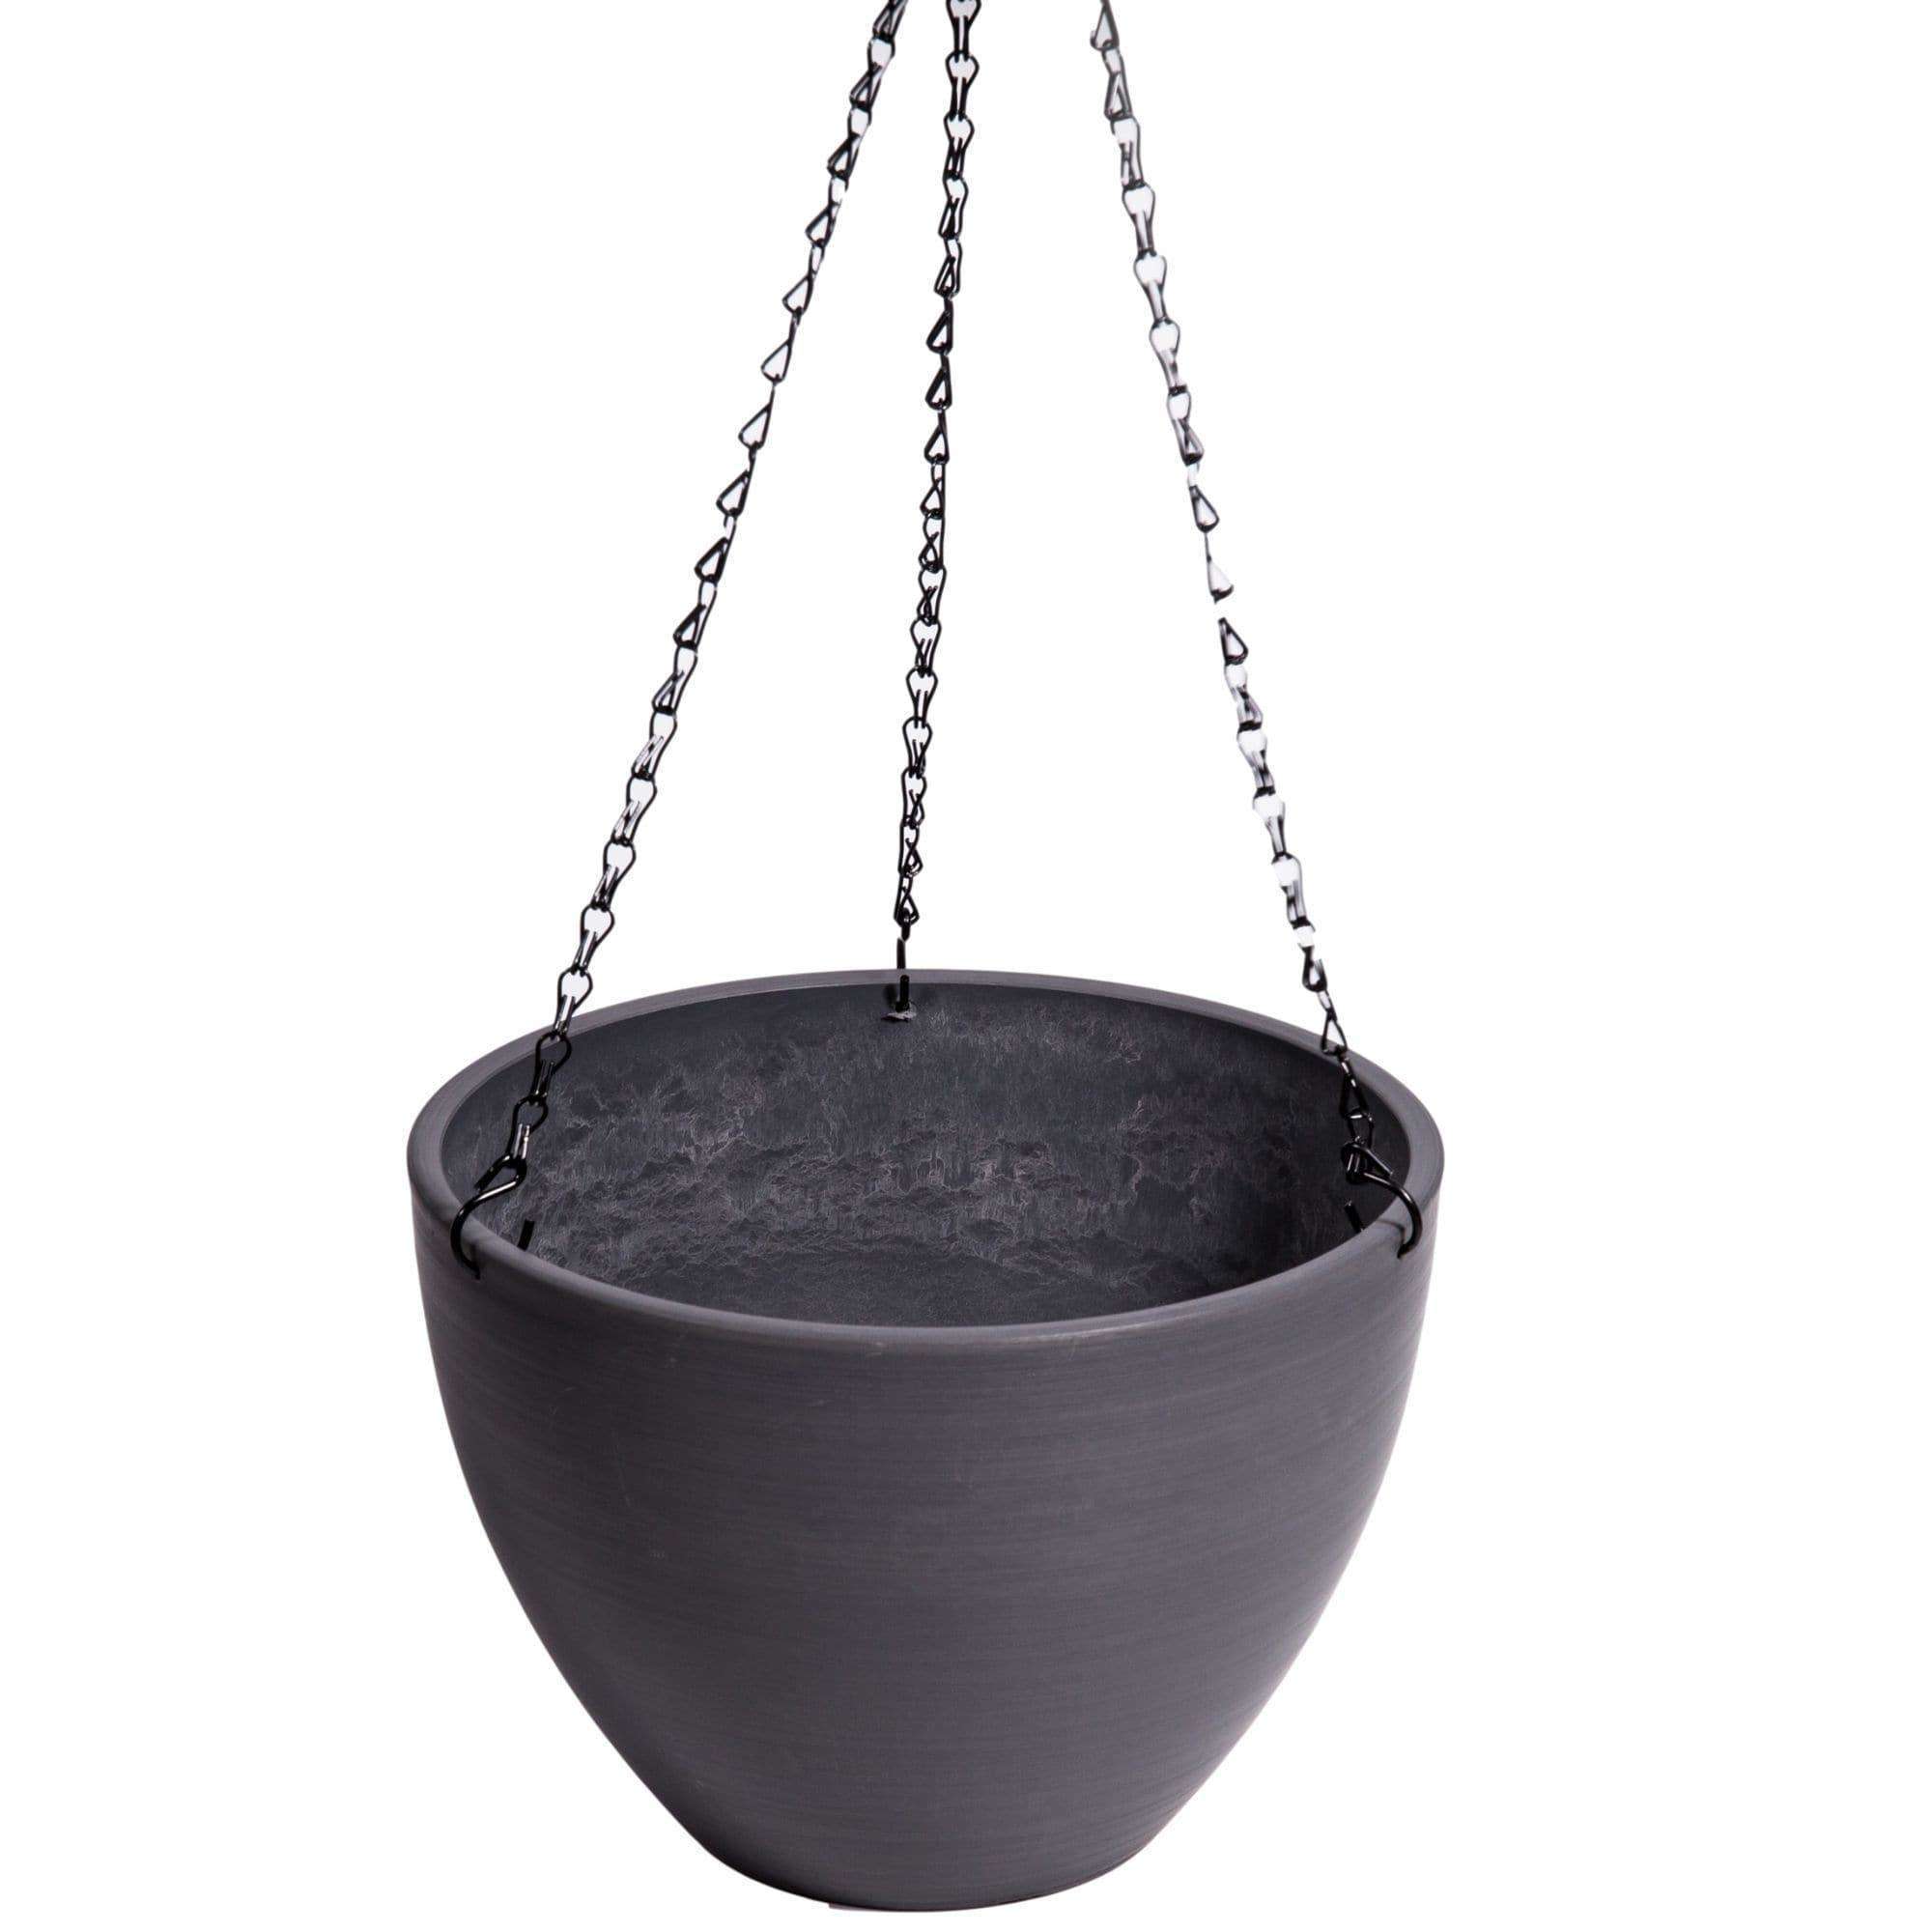 hanging-grey-plastic-pot-with-chain-30cm-325720.jpg